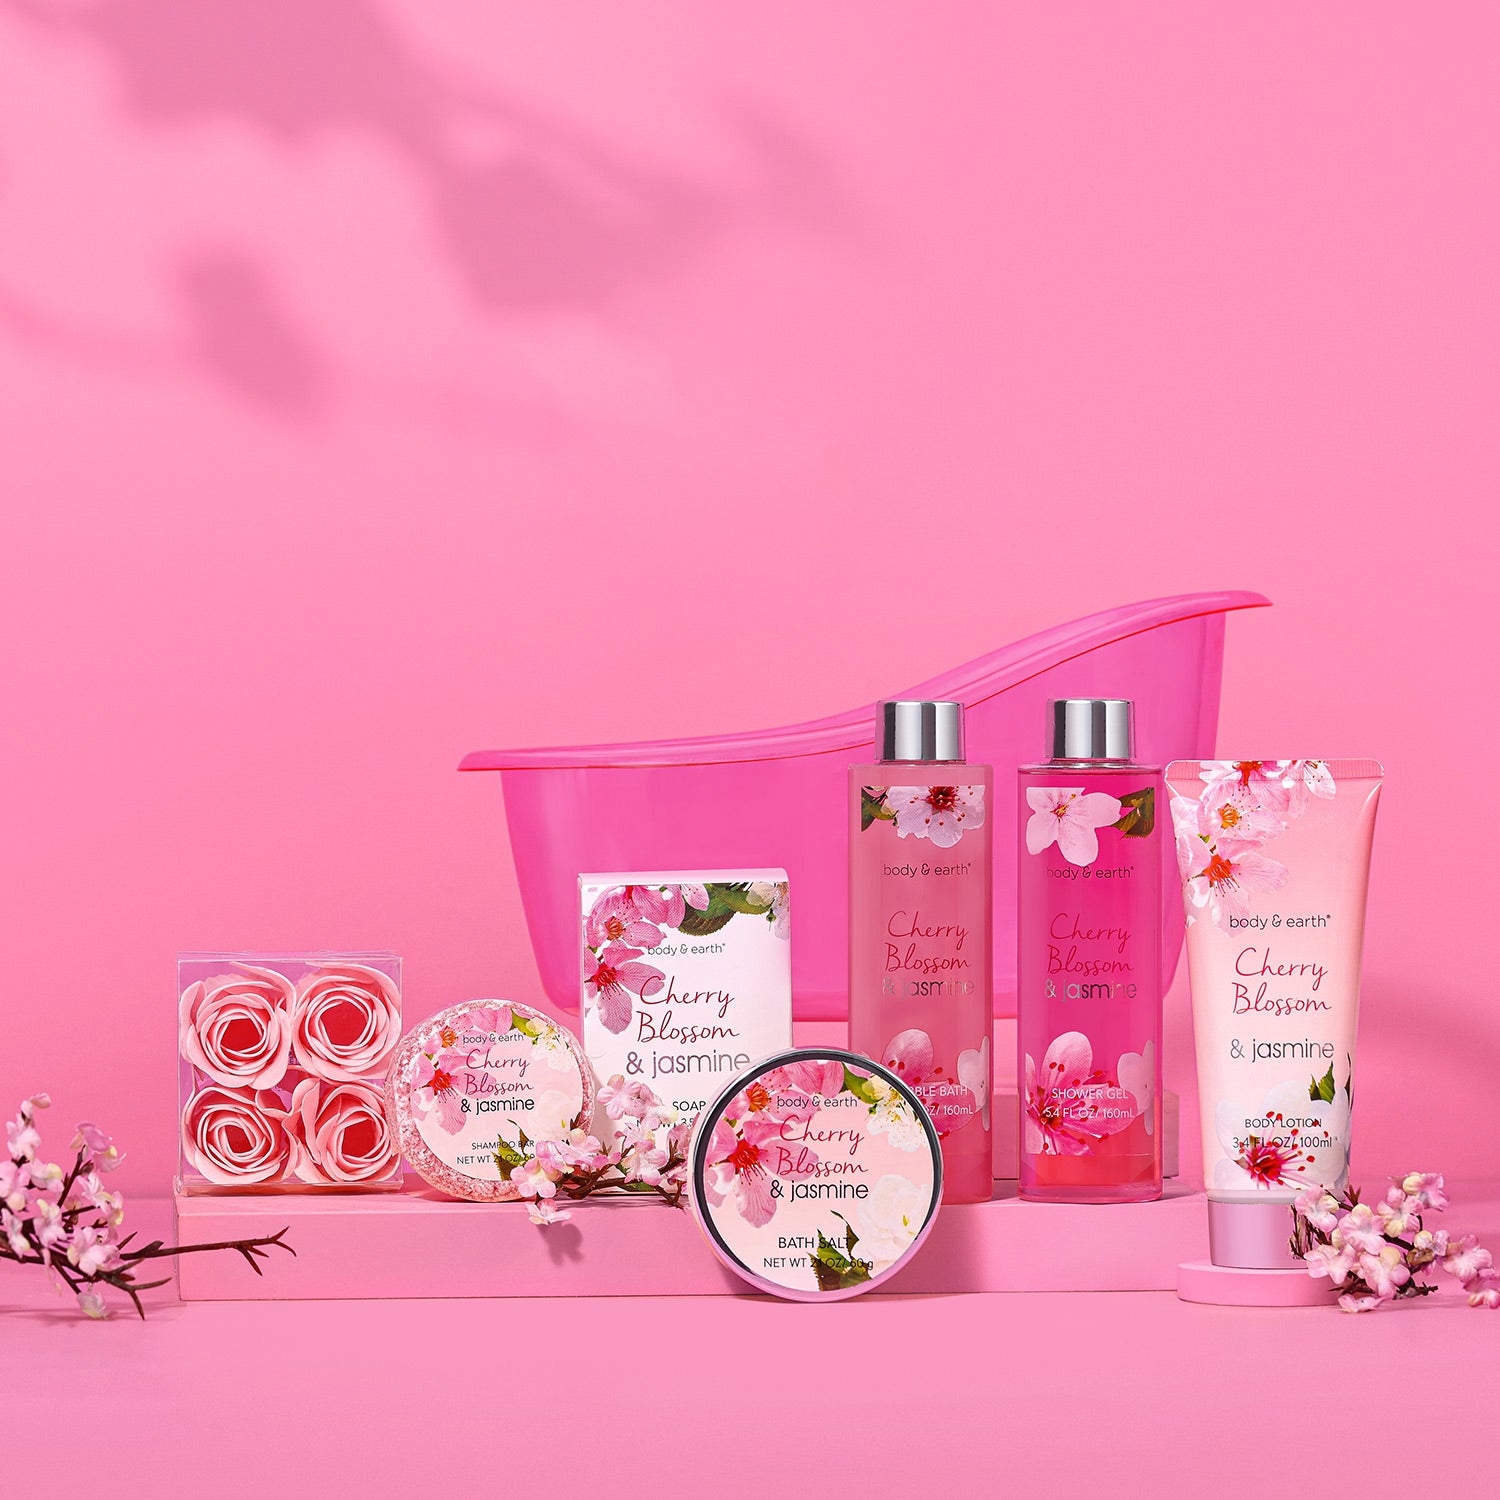 Body & Earth Gift Sets Cherry Blossom & Jasmine Spa Bathtub Set